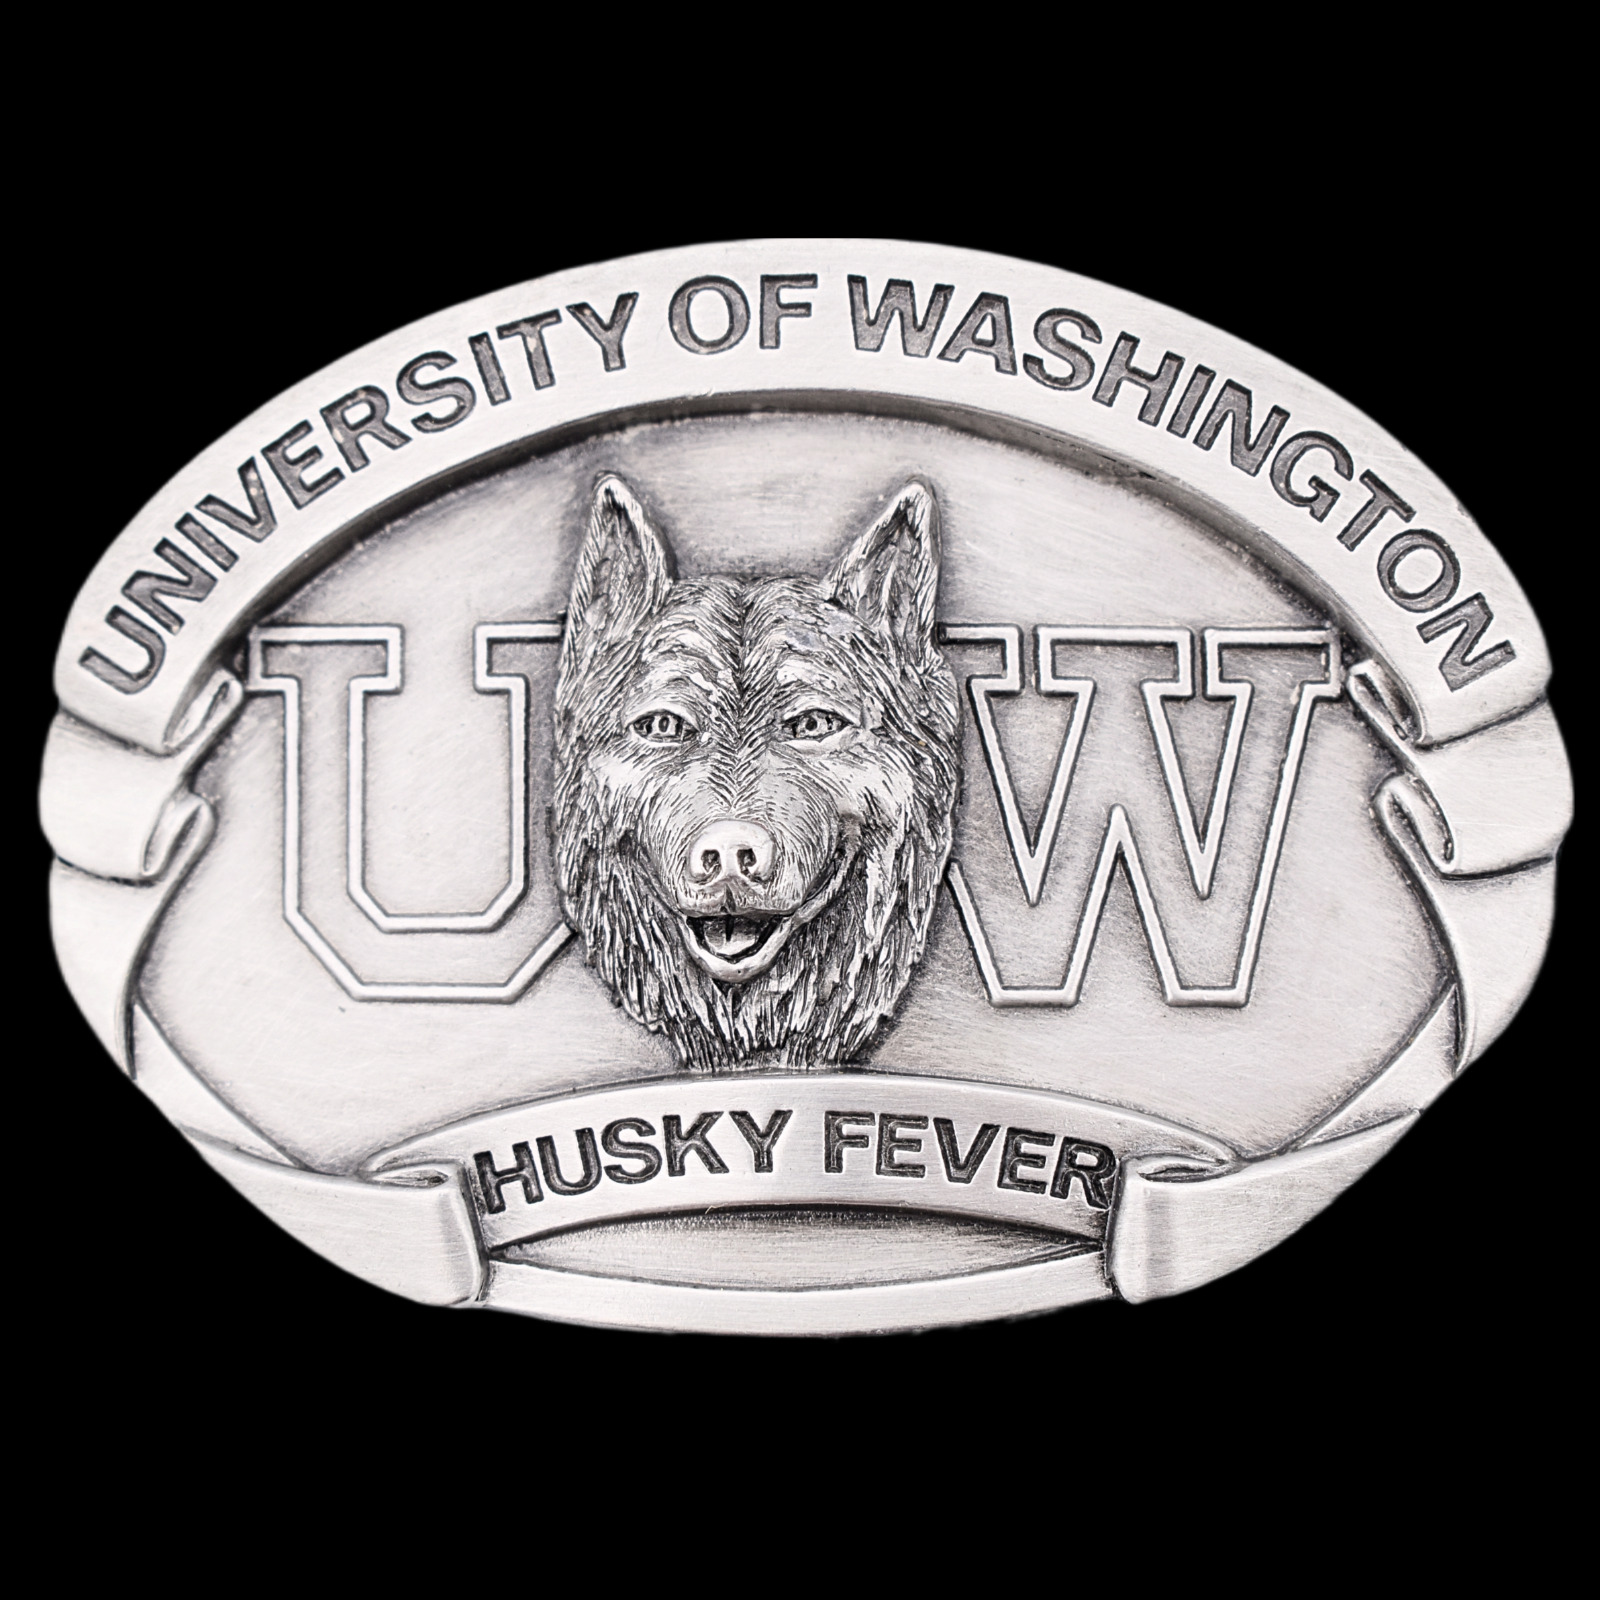 University of Washington Huskies UW Husky Fever Vintage Belt Buckle